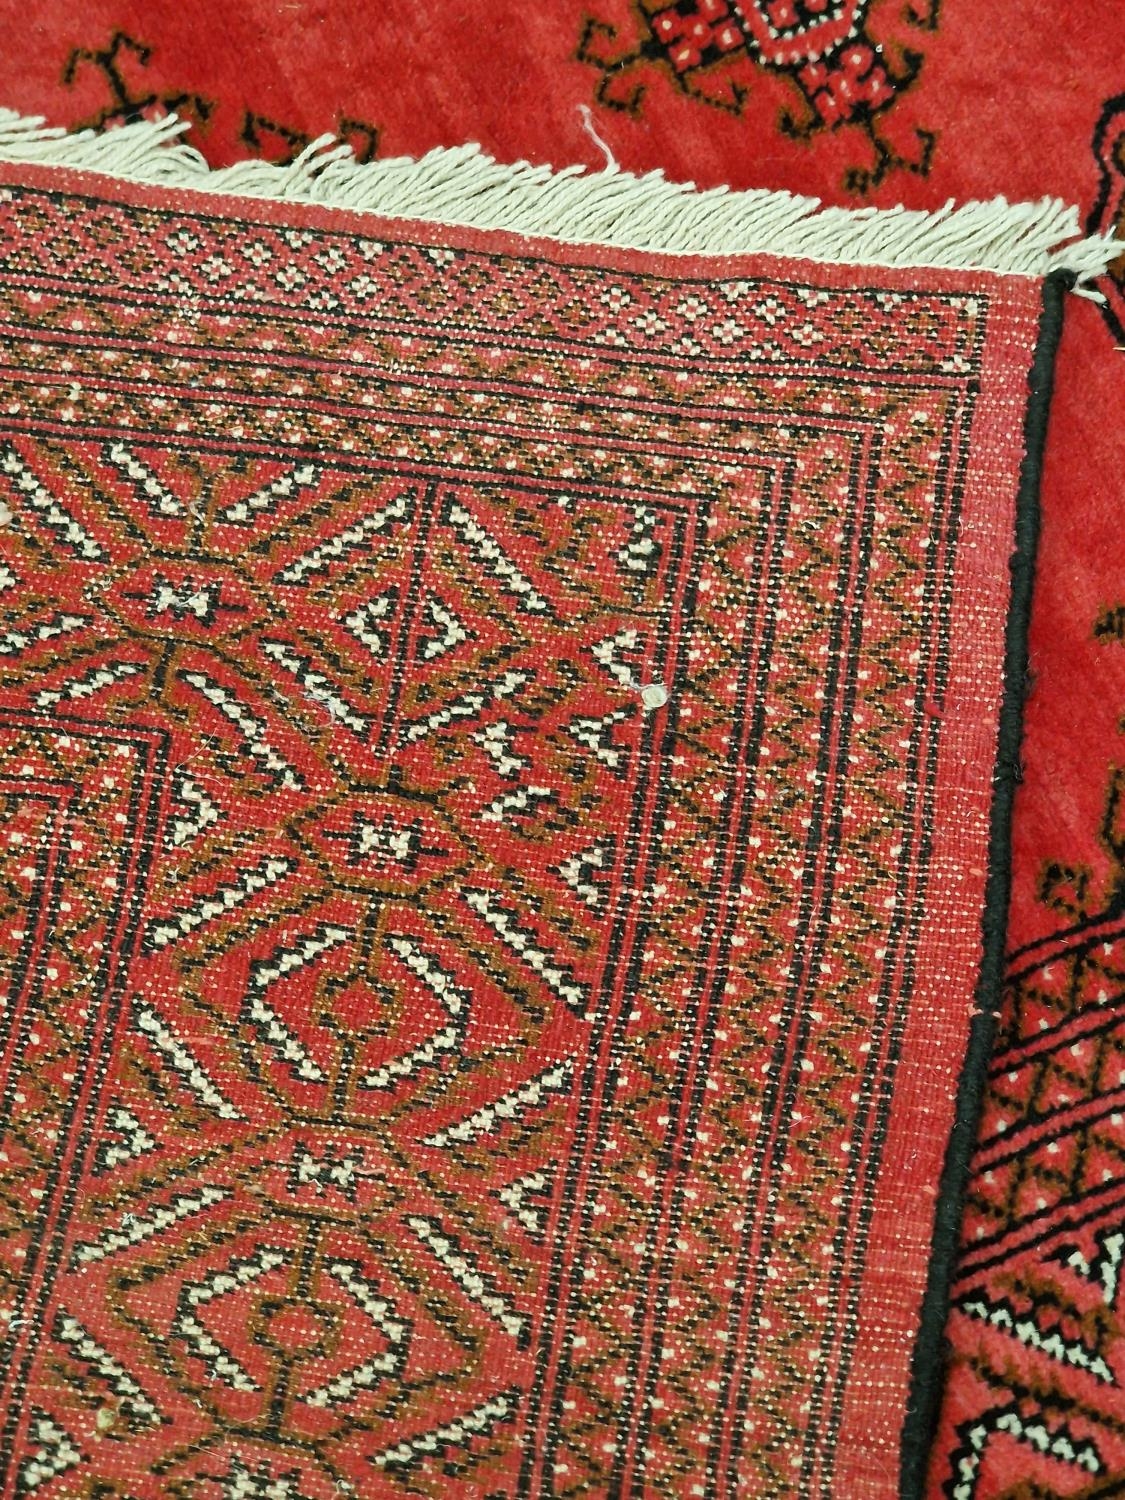 Large room size red patterned carpet 370x295cm. - Image 4 of 4